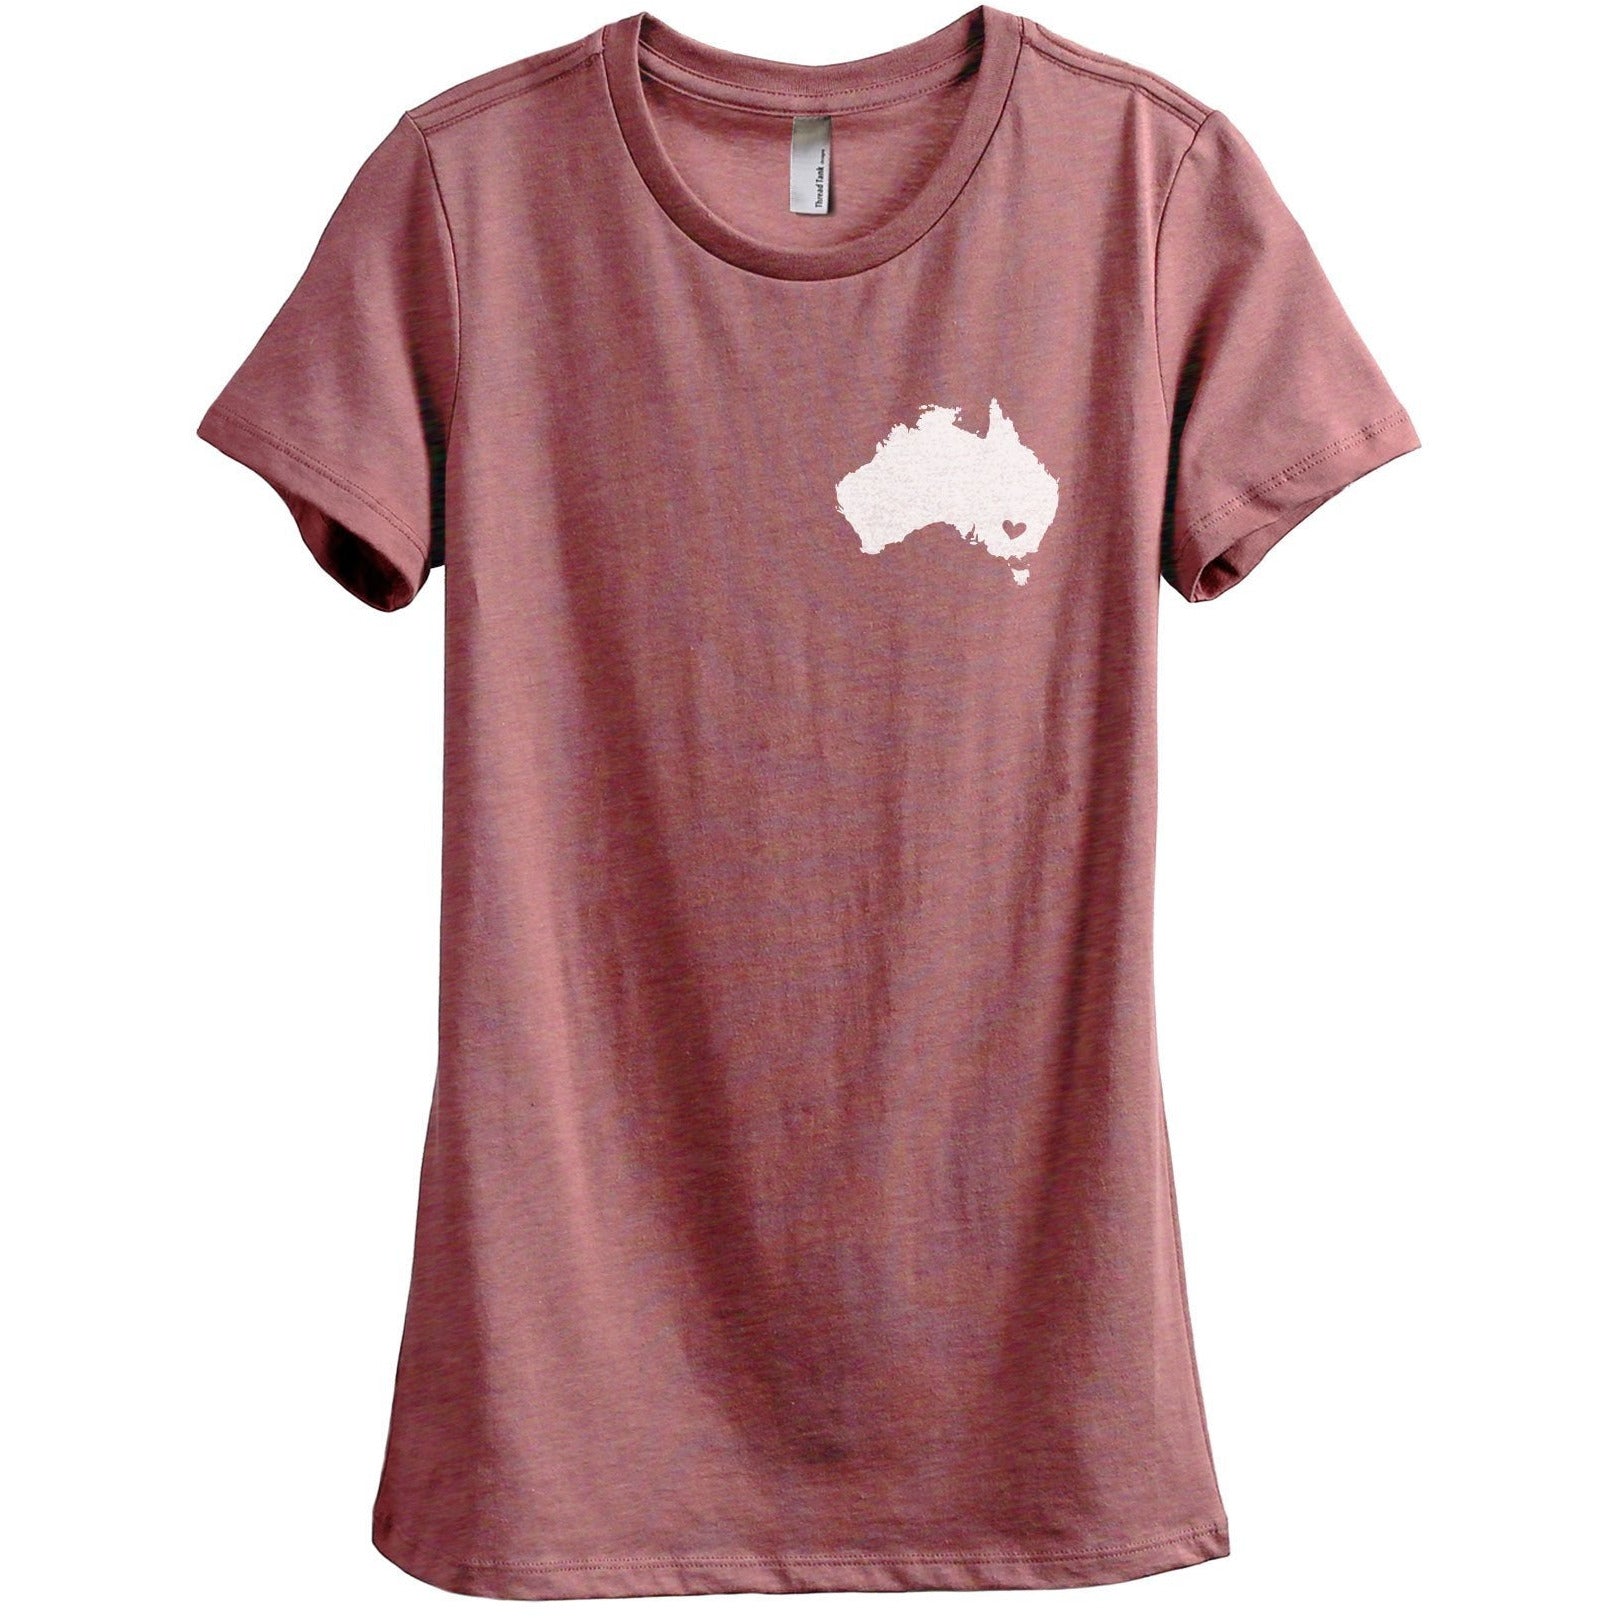 Australia Heart Women's Relaxed Crewneck T-Shirt Top Tee Heather Rouge